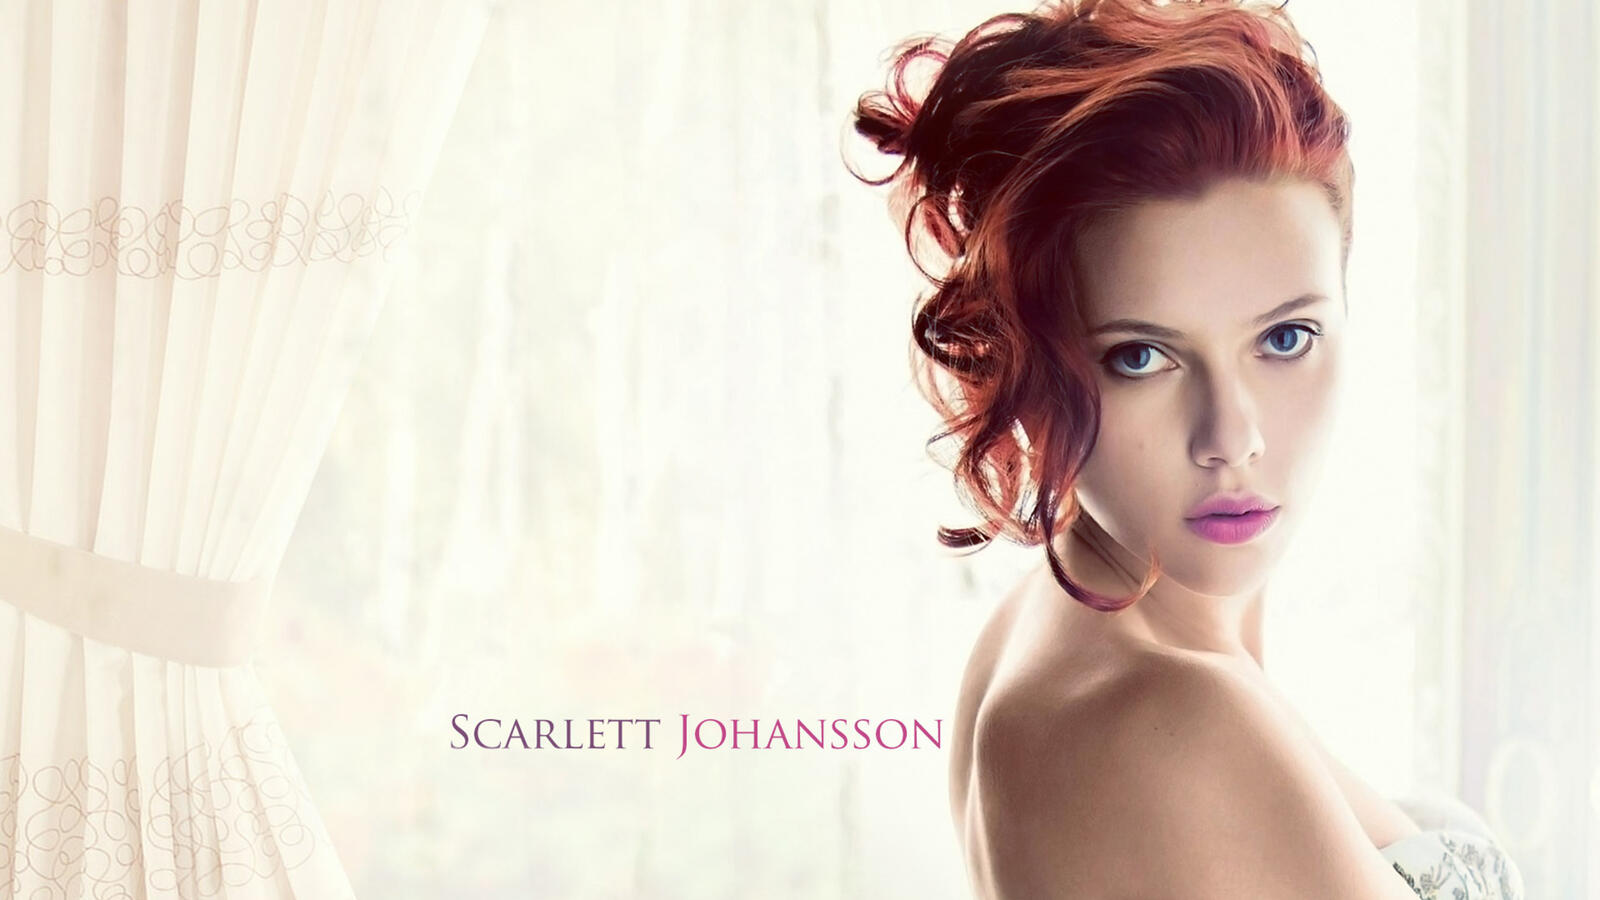 Wallpapers Scarlett Johansson celebrities girls on the desktop